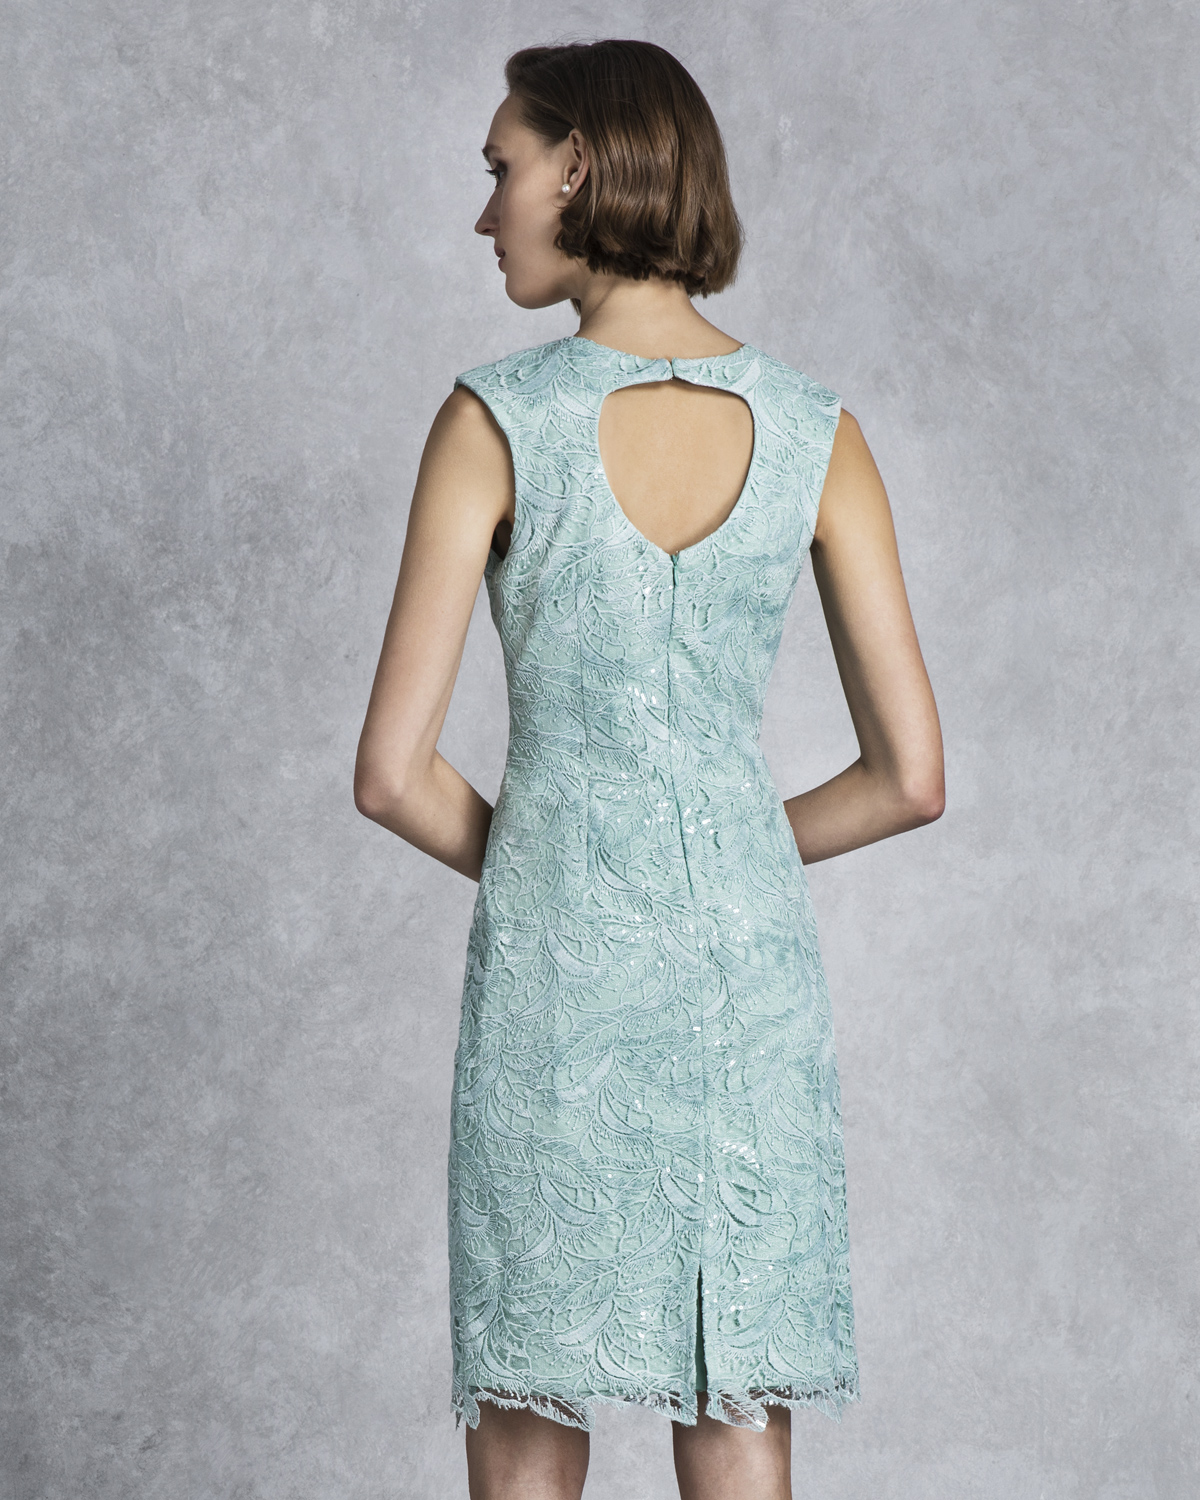 Classic Dresses / Short evening lace dress